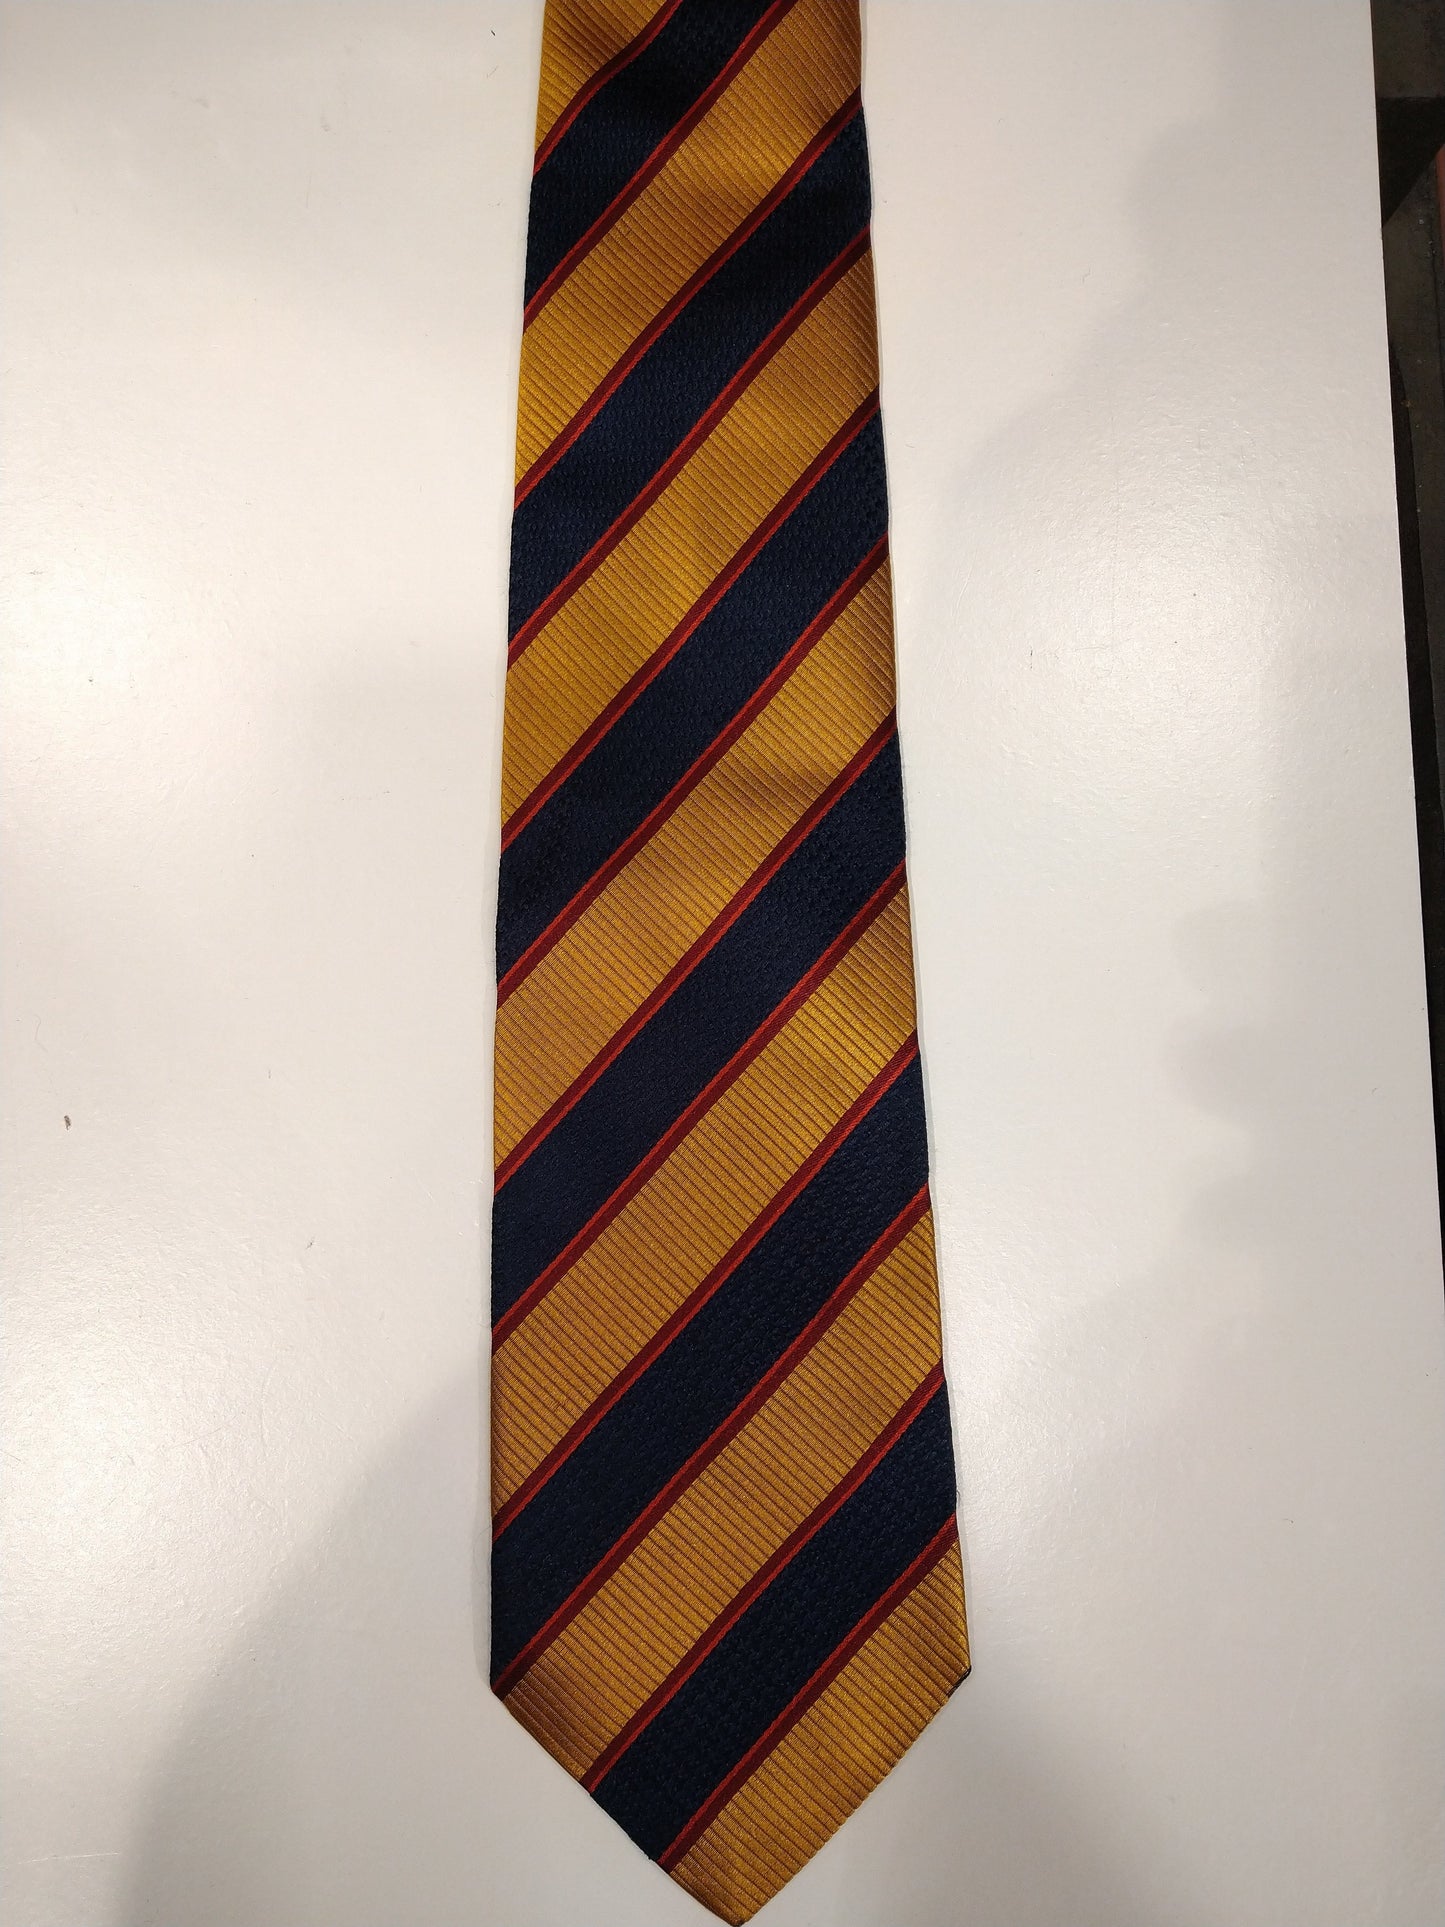 La corbata de seda Scapa o Escocia. Rayas de color rojo azul dorado.